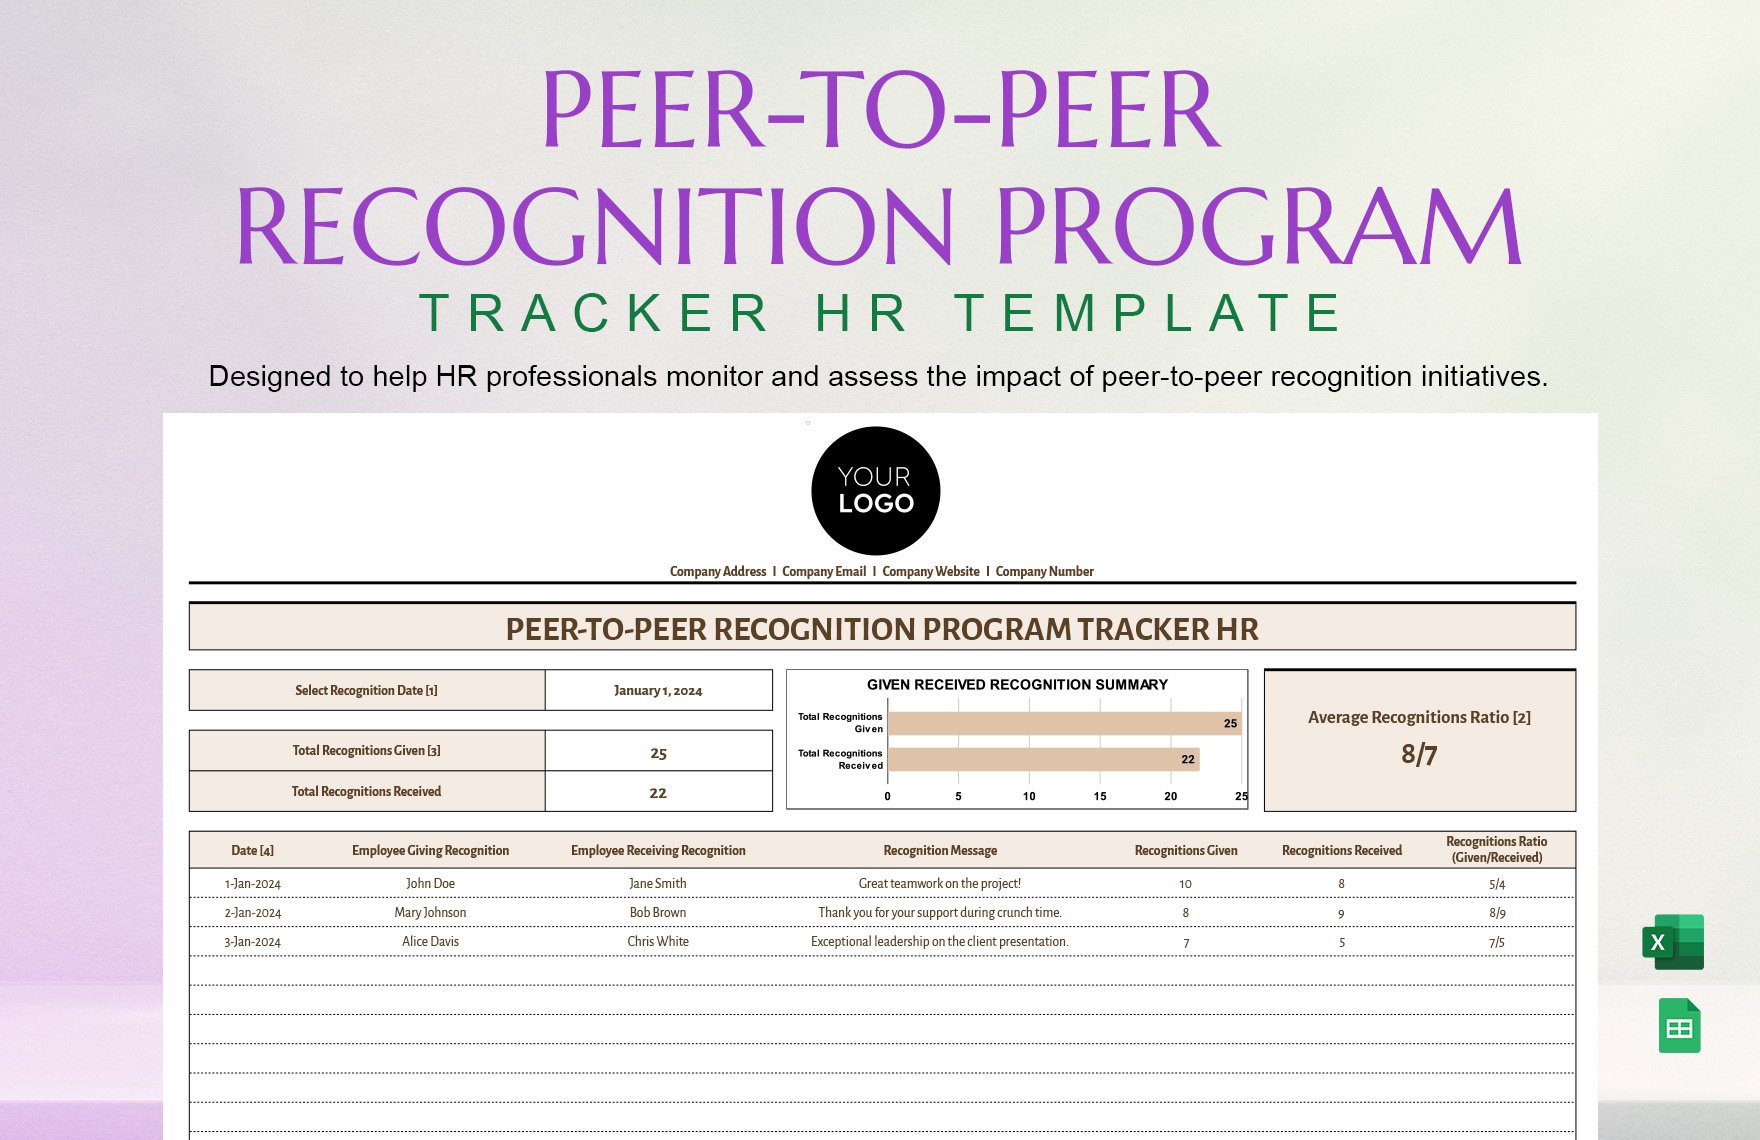 Peer-to-Peer Recognition Program Tracker HR Template